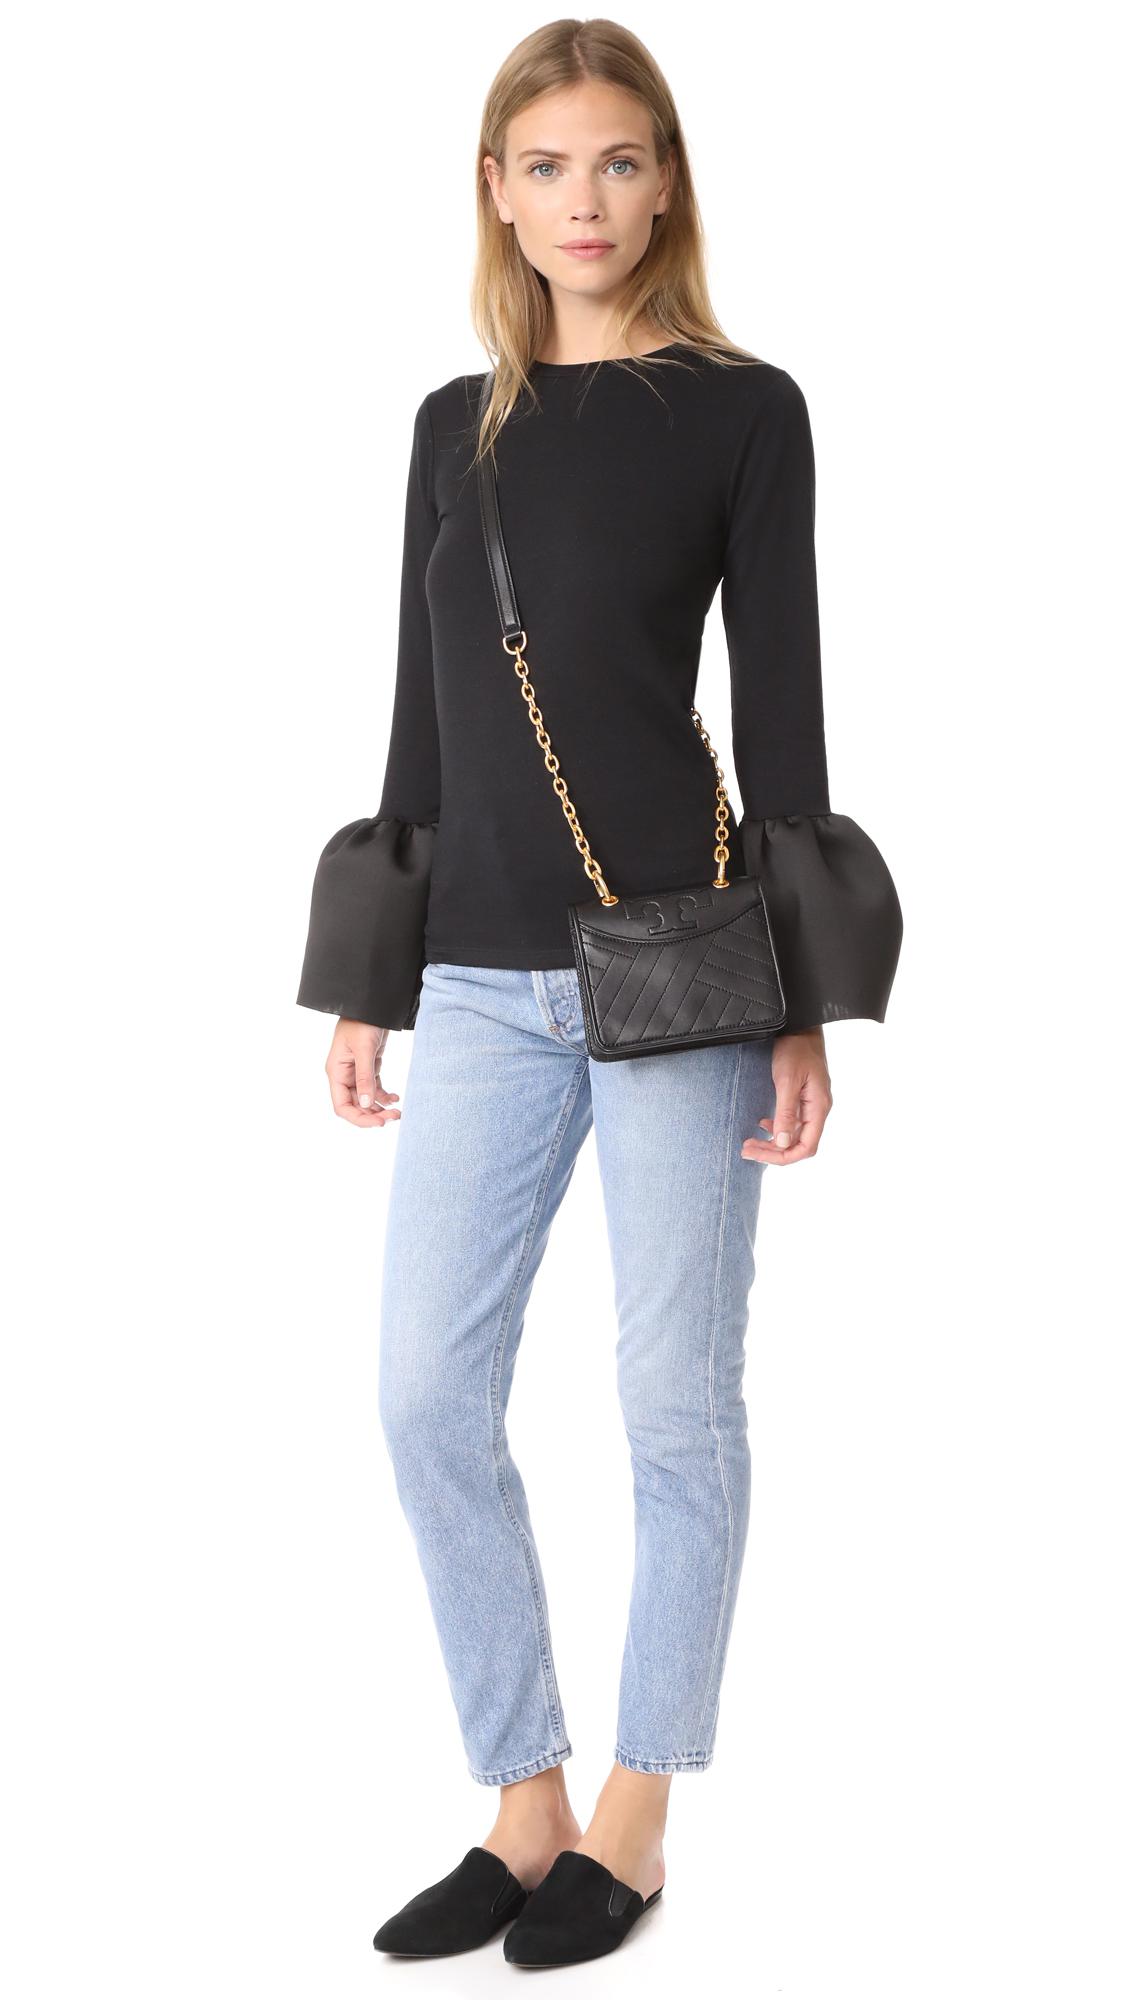 Tory Burch Alexa Mini Shoulder Bag in Black | Lyst